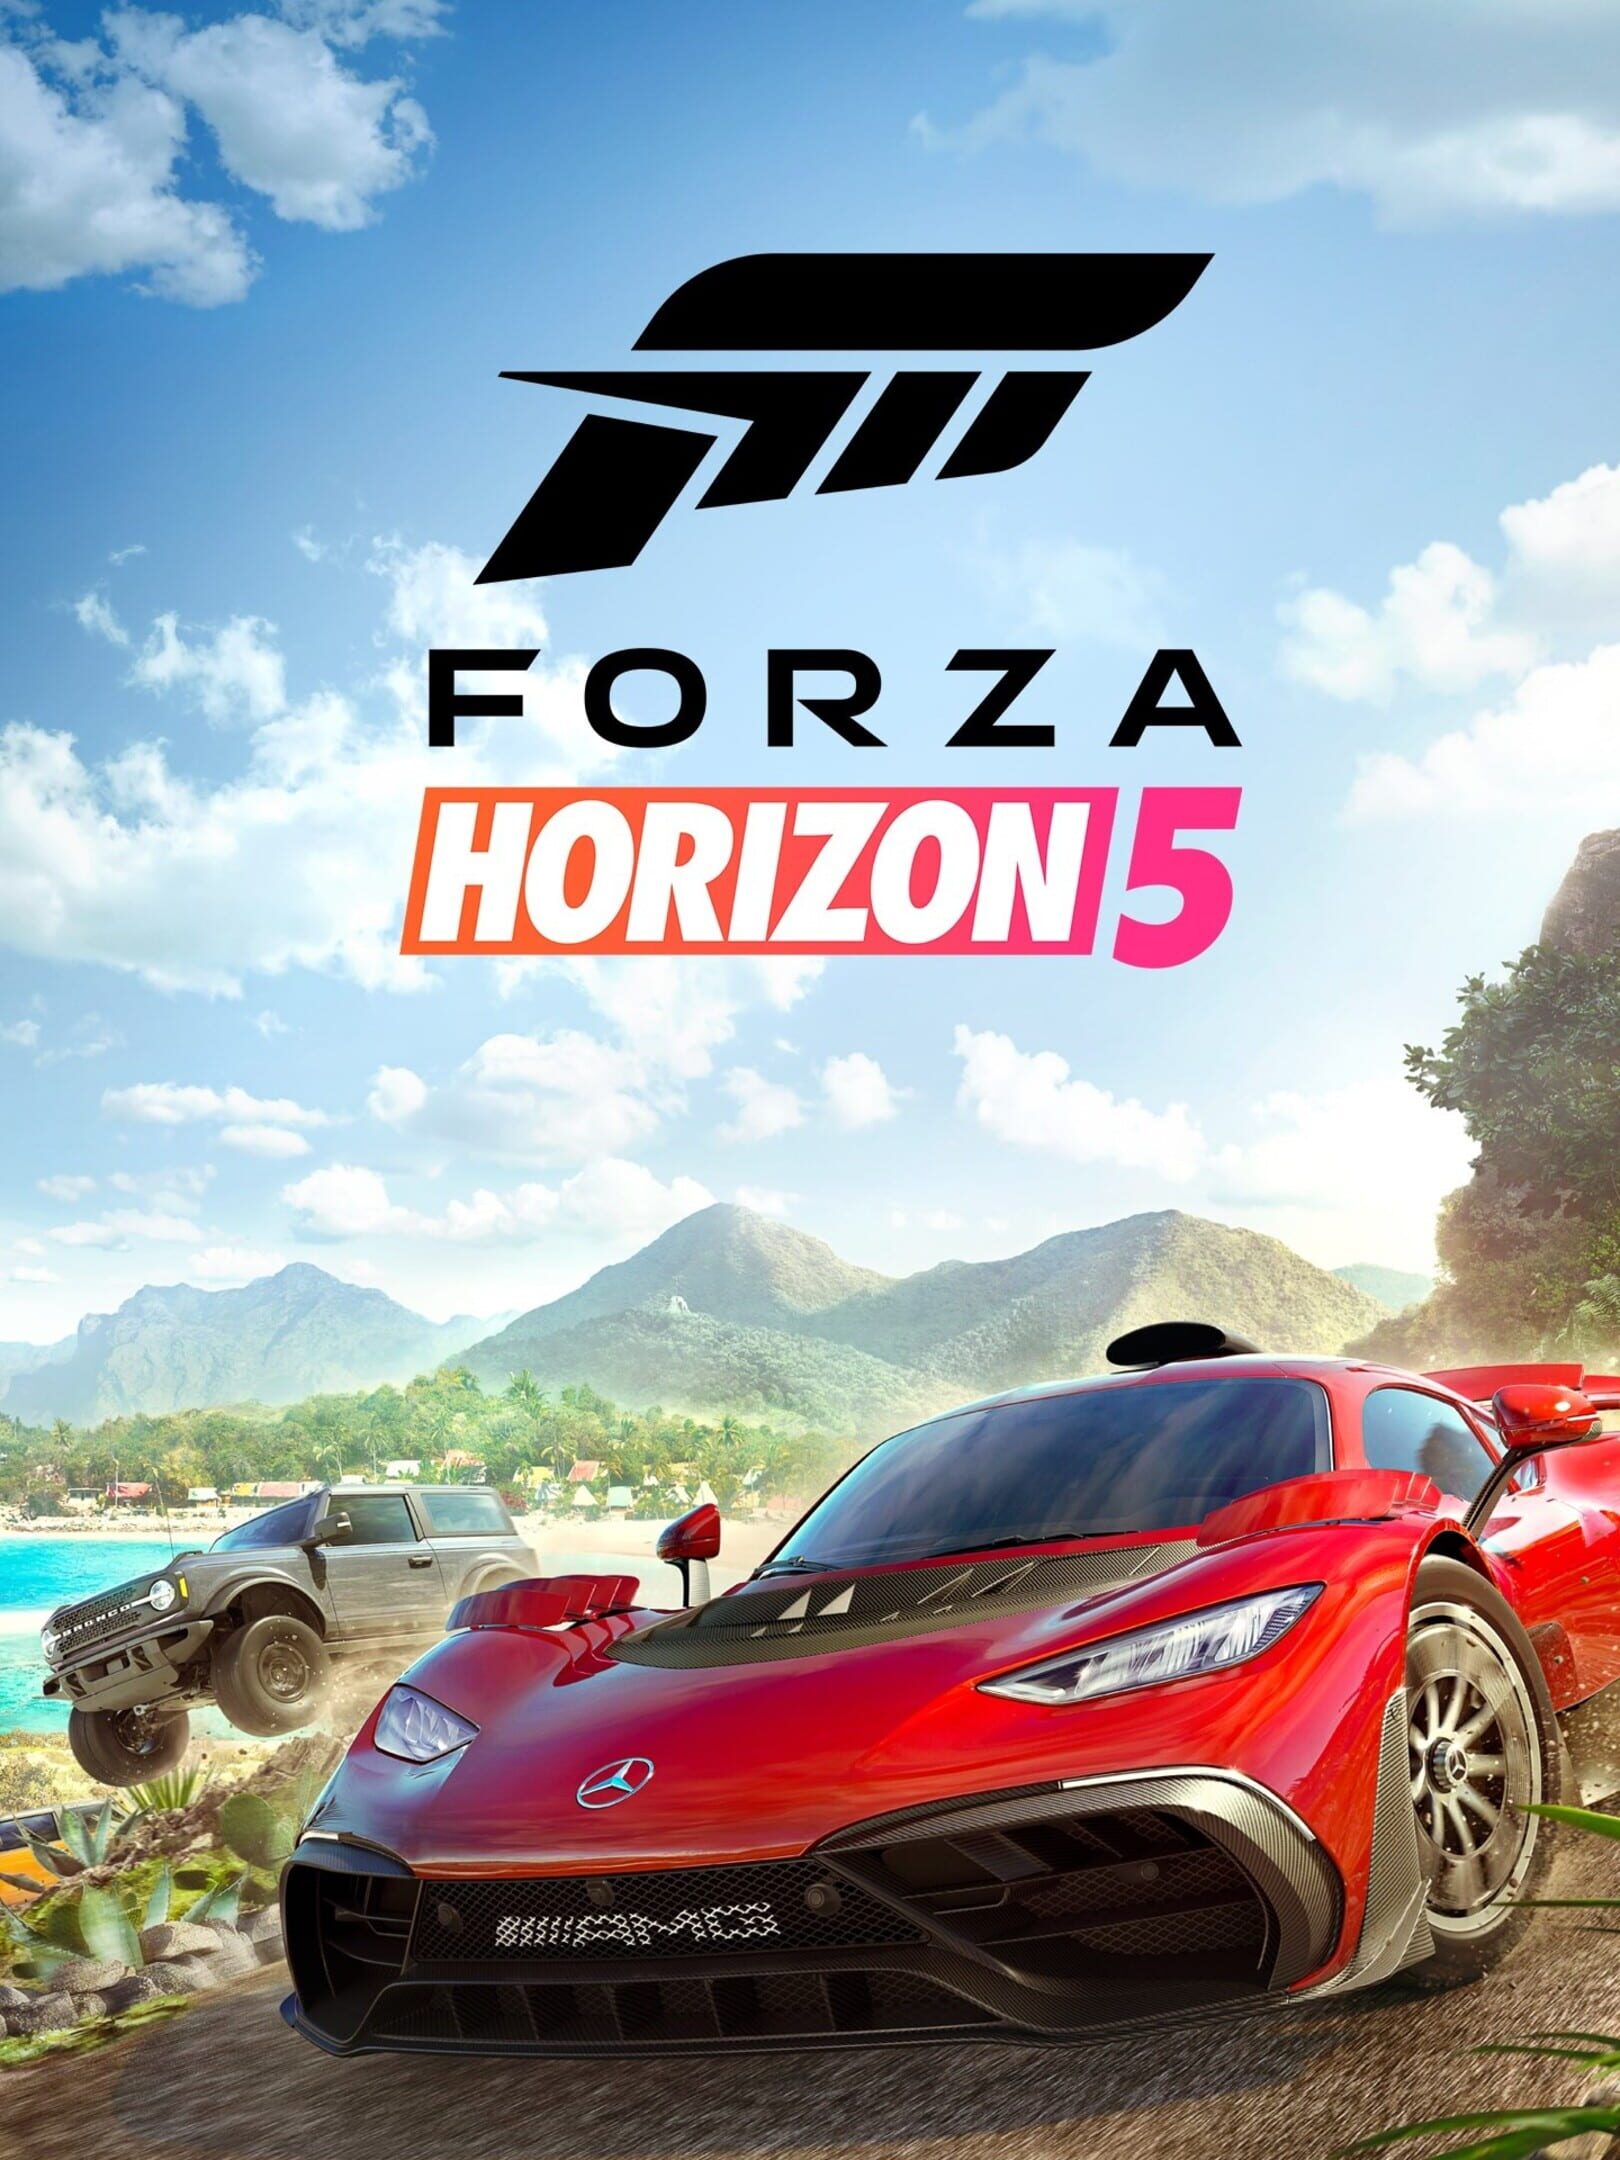 Forza Horizon 5: Hot Wheels - Metacritic